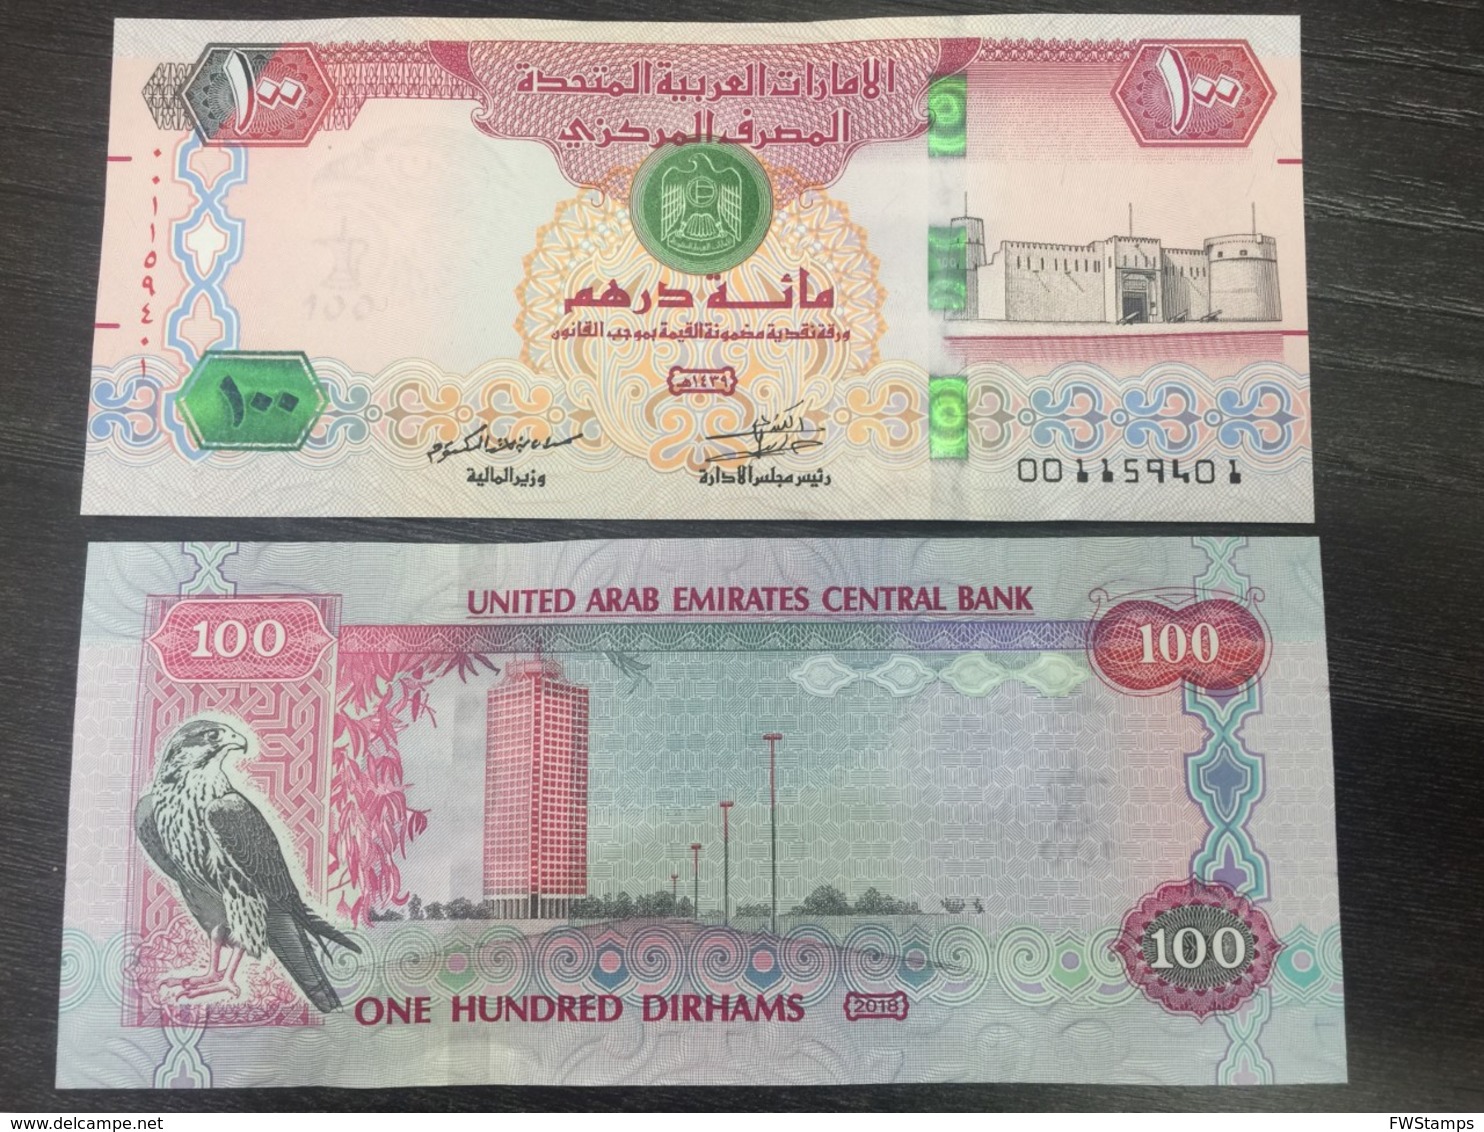 UAE 2018 100 Dirhams UNC Banknote New Redrawn Design With Security Features - Ver. Arab. Emirate